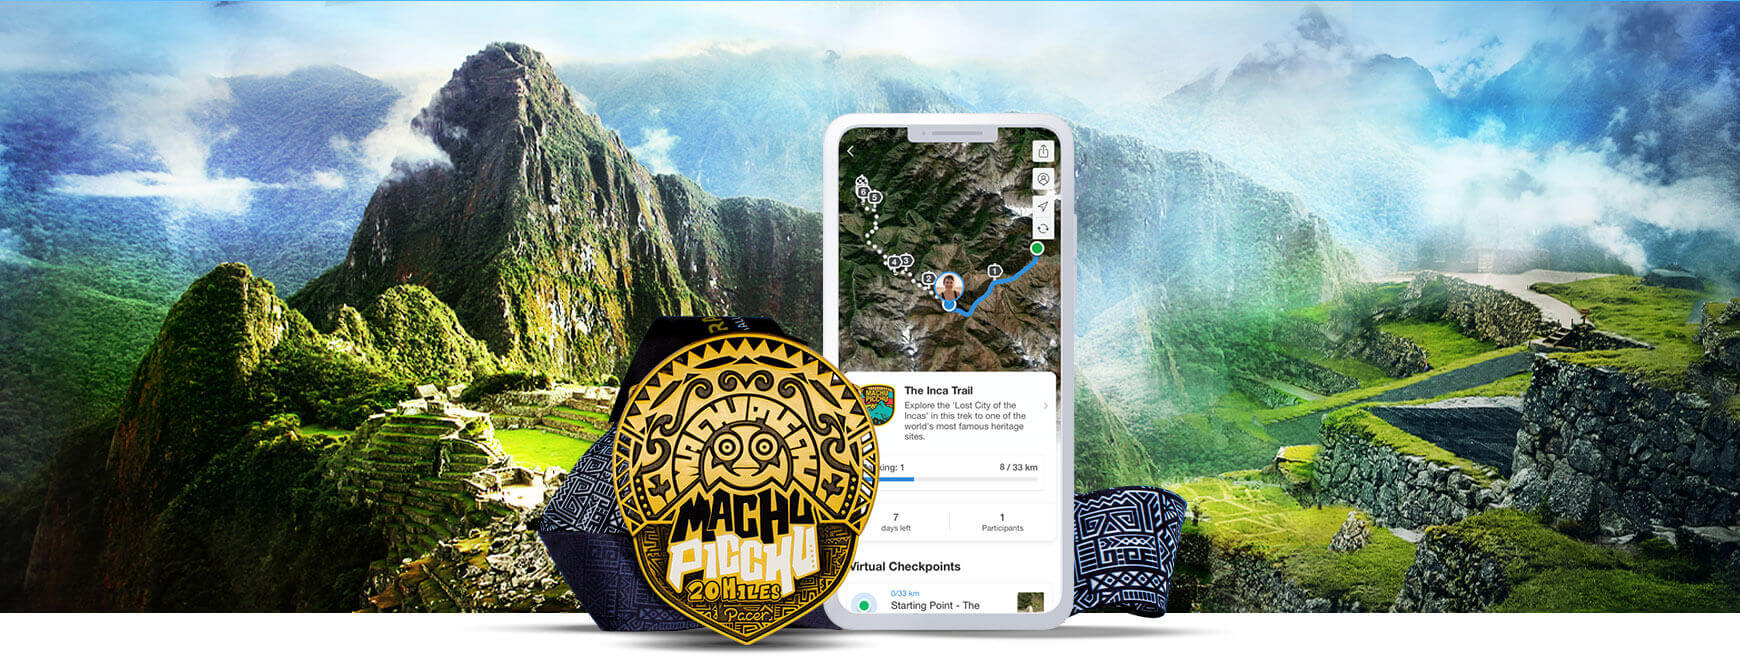 Machu Picchu Virtual Challenge